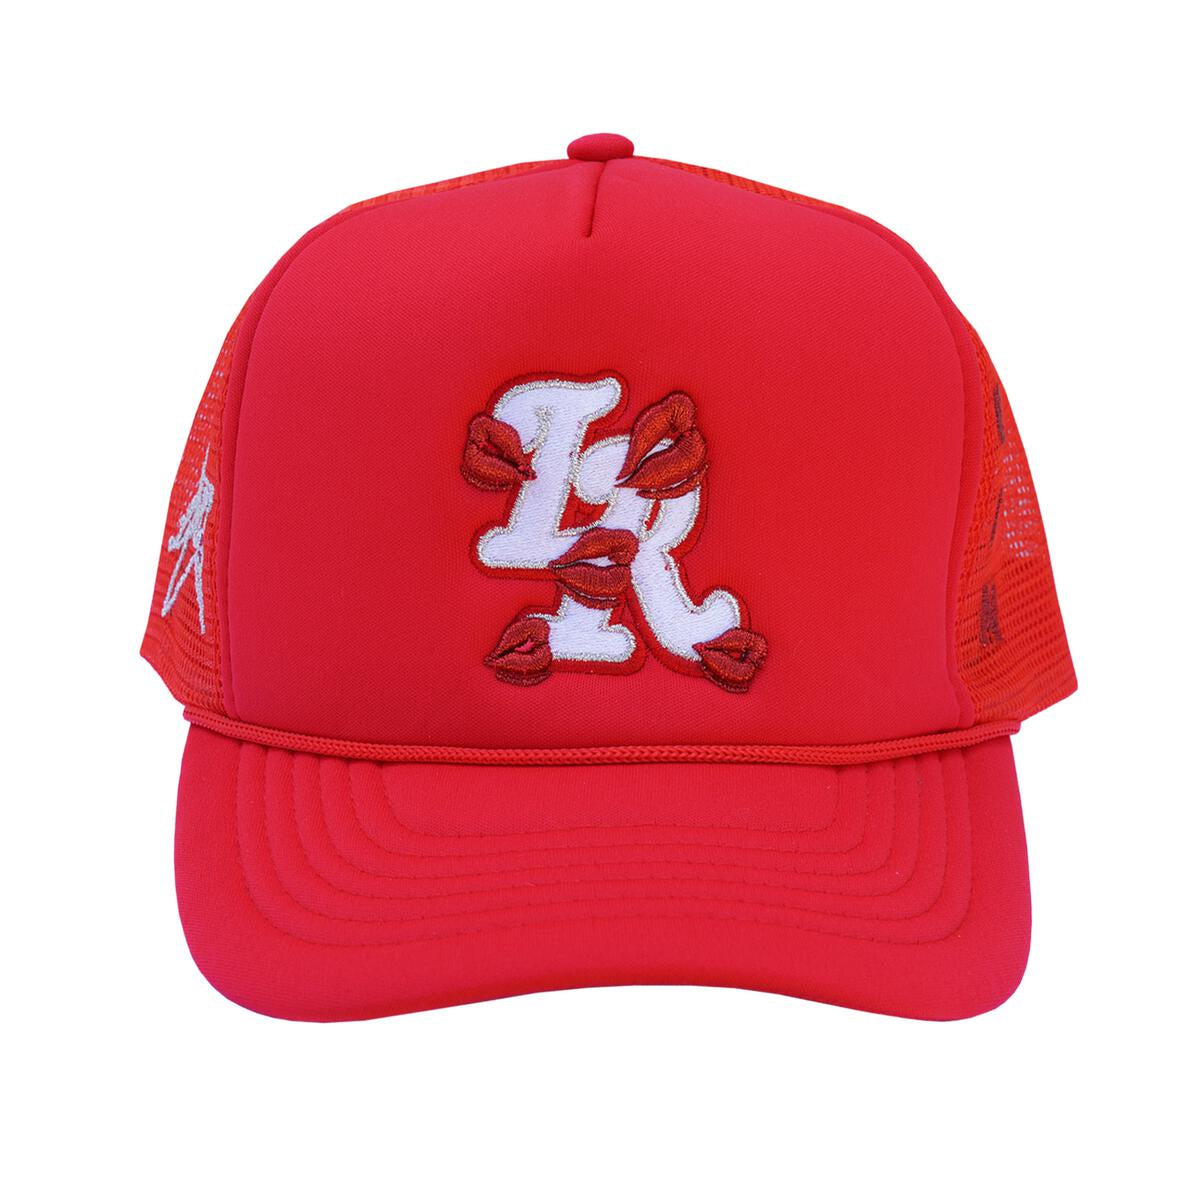 LaRopa Red LR Trucker Hat